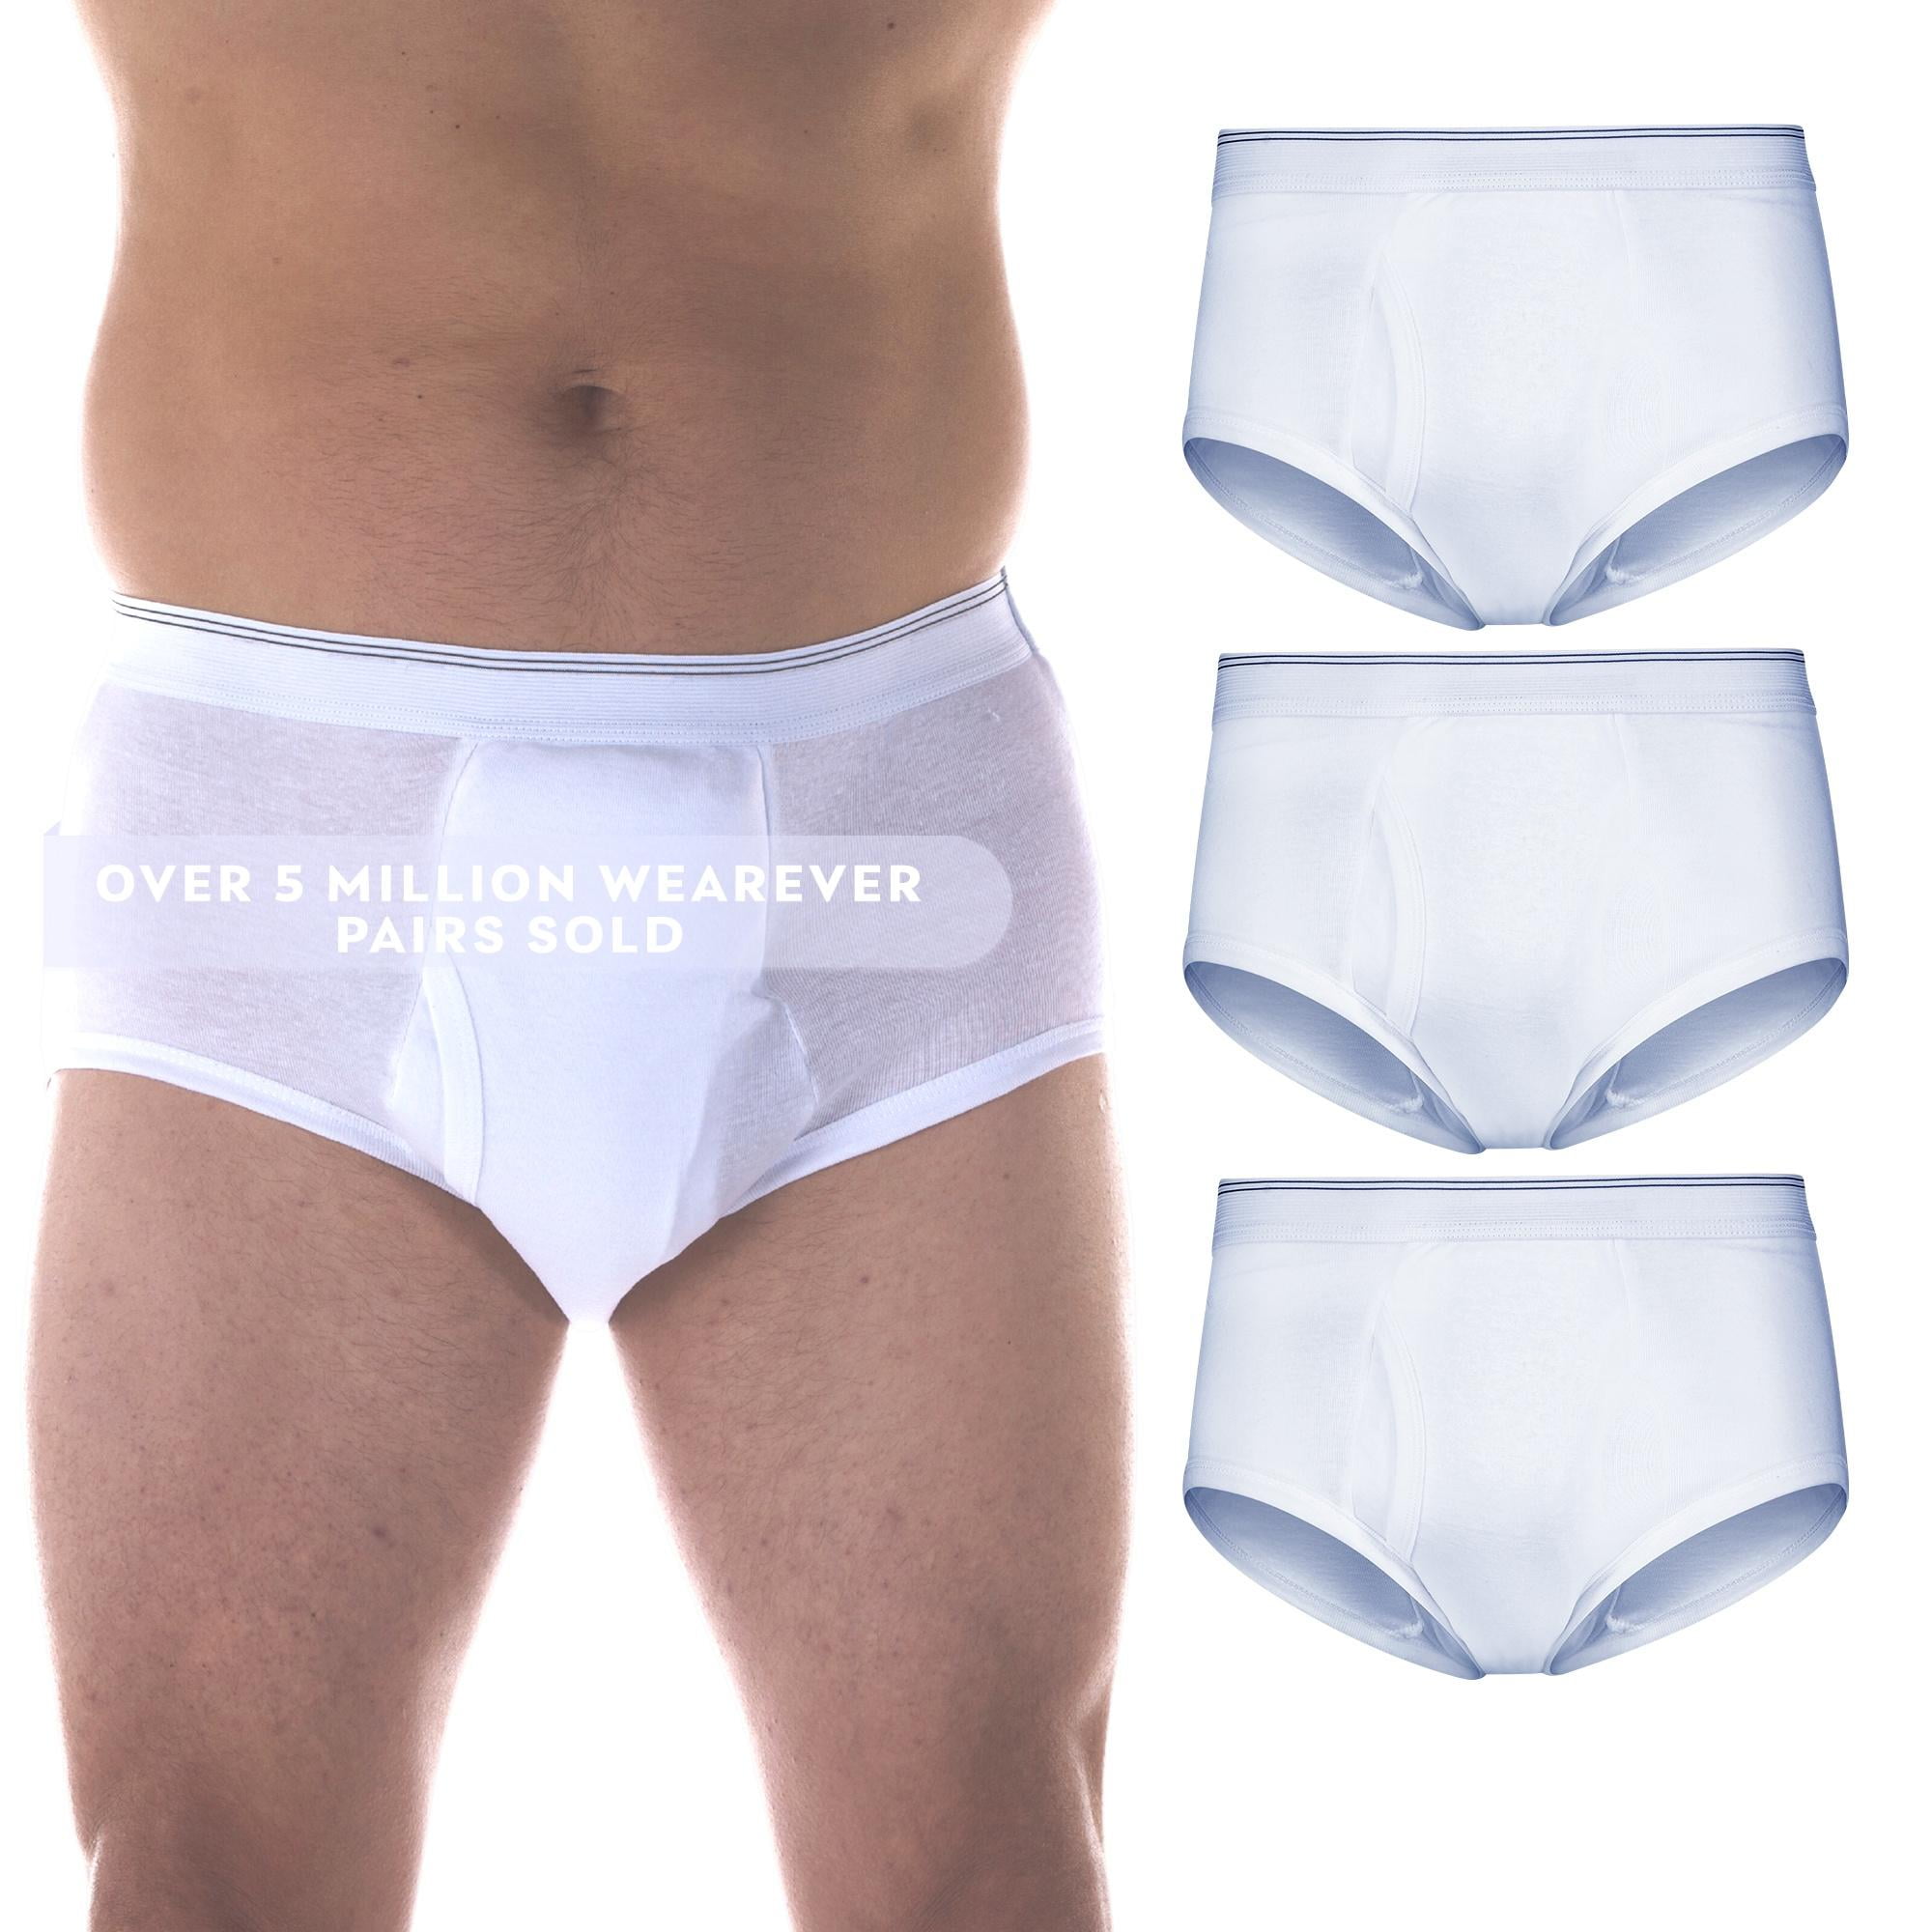 Men's Underwear, Snap-On Waterproof Incontinence Underwear